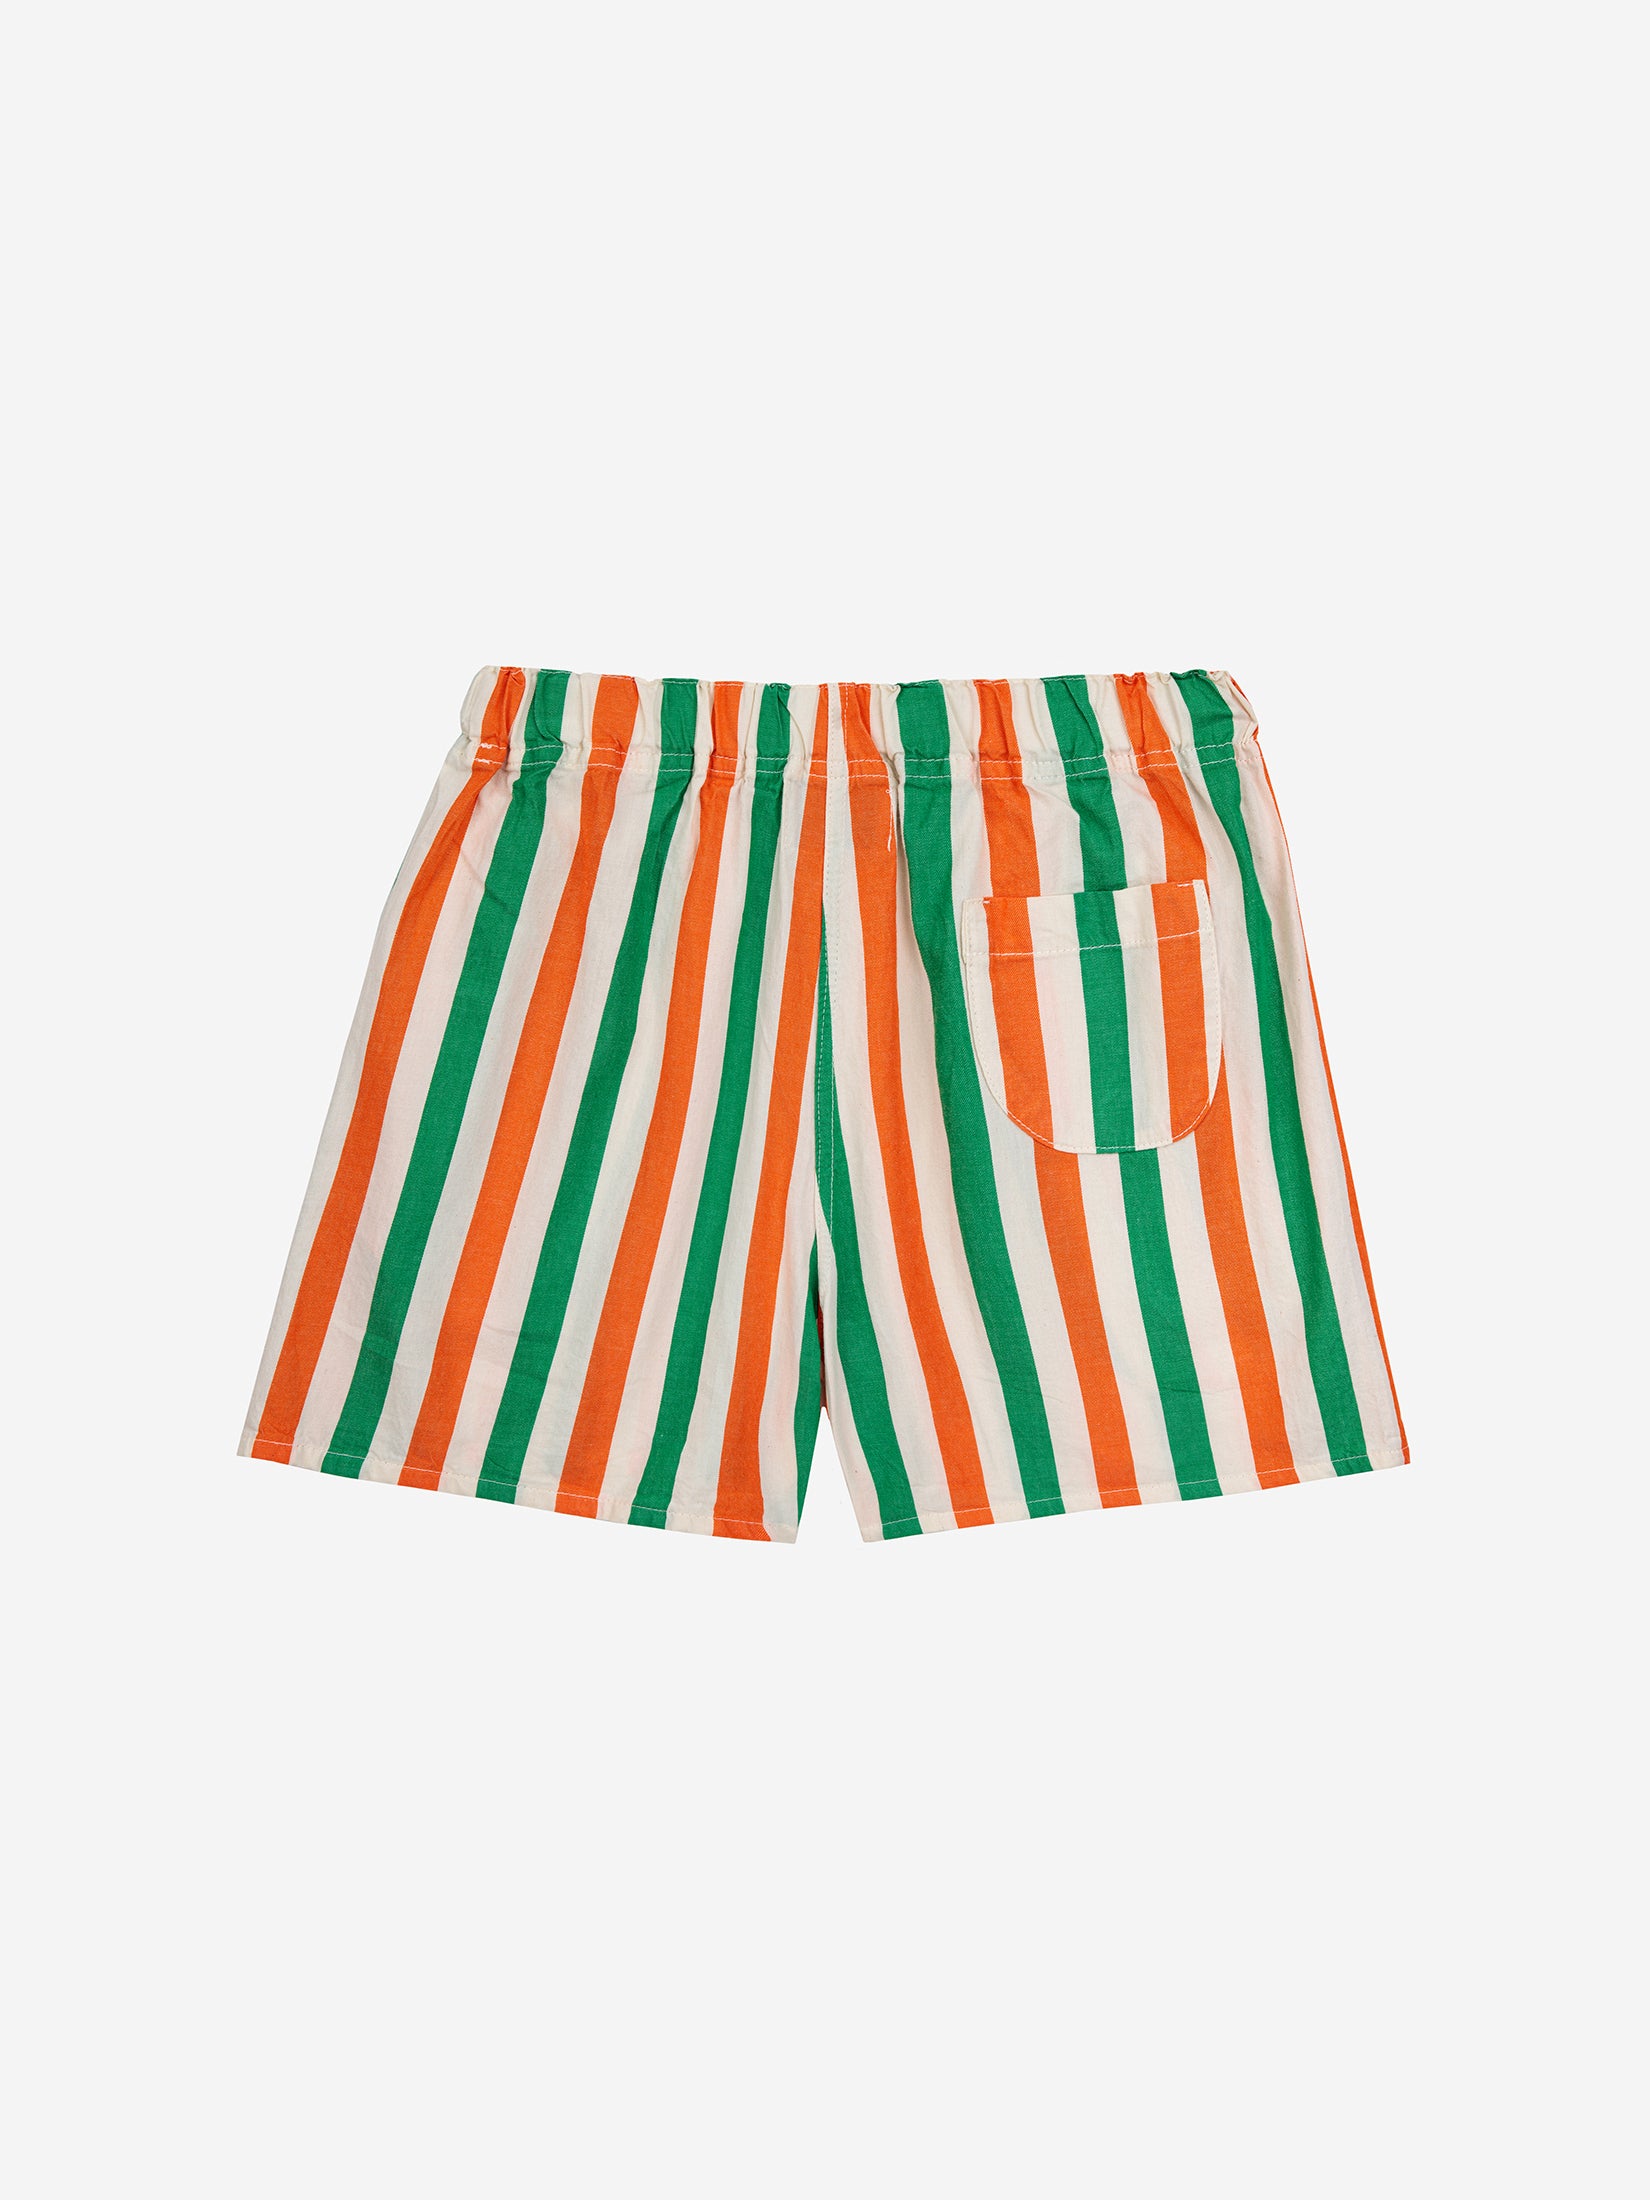 Vertical stripes woven shorts